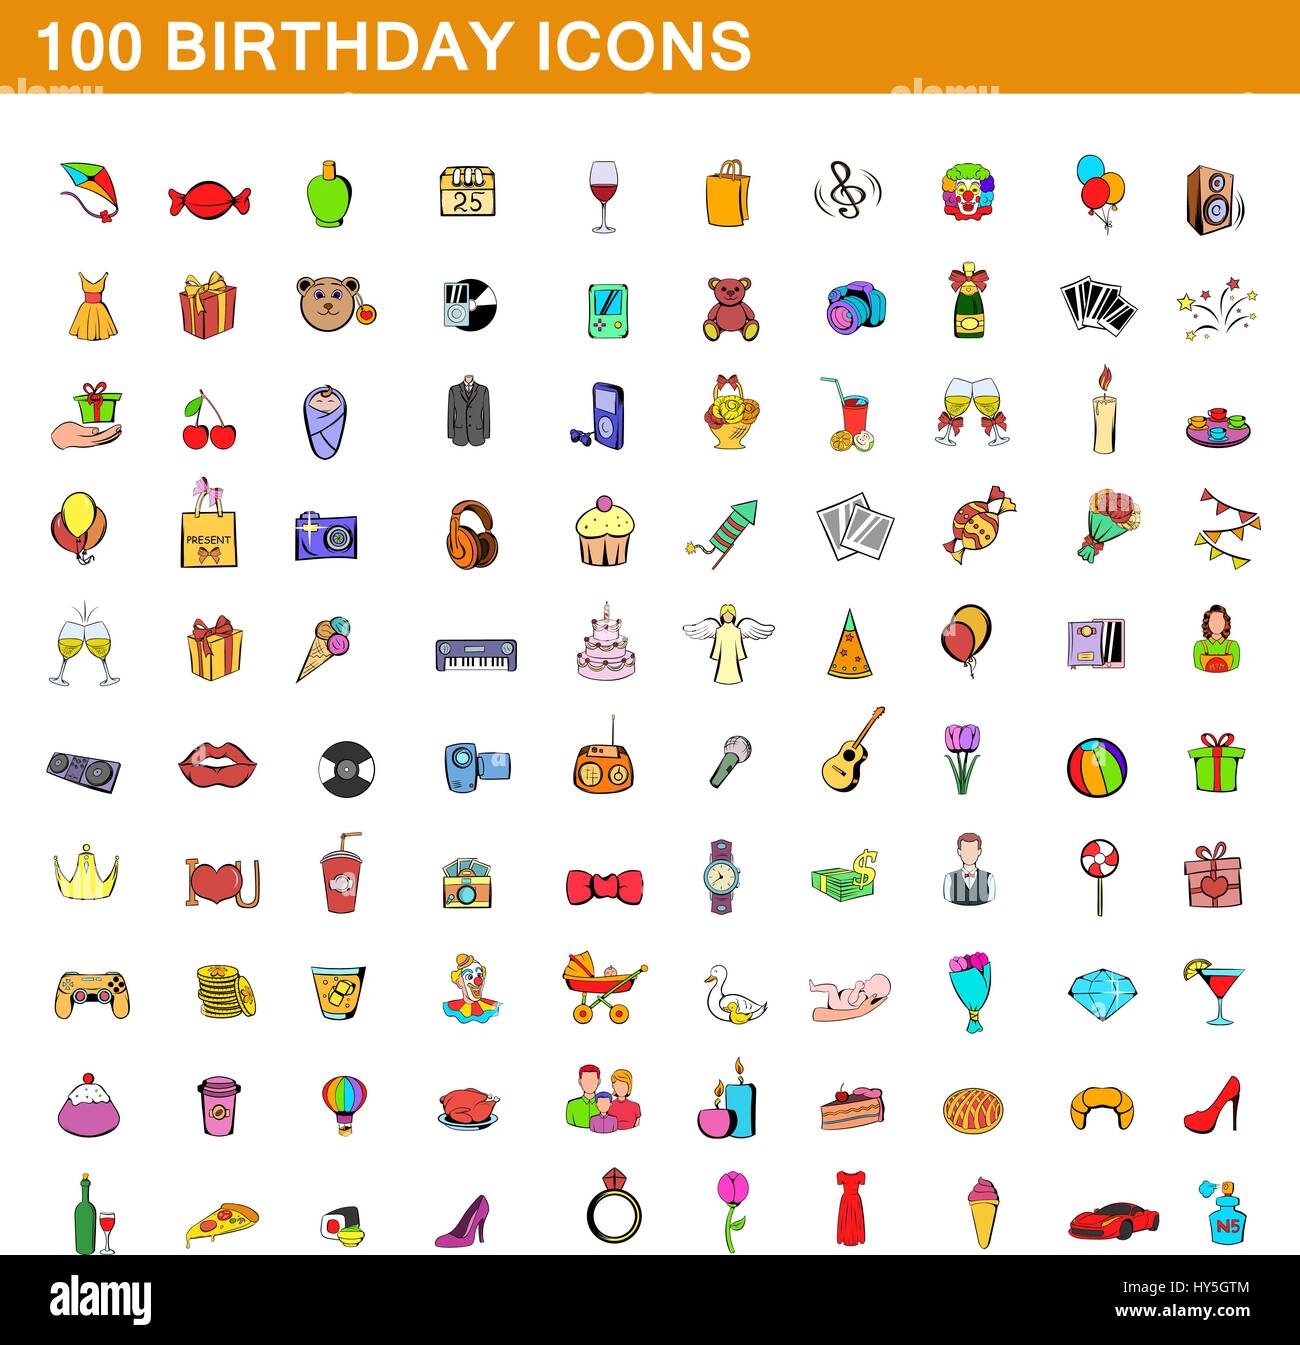 100 birthday icons set, cartoon style Stock Vector